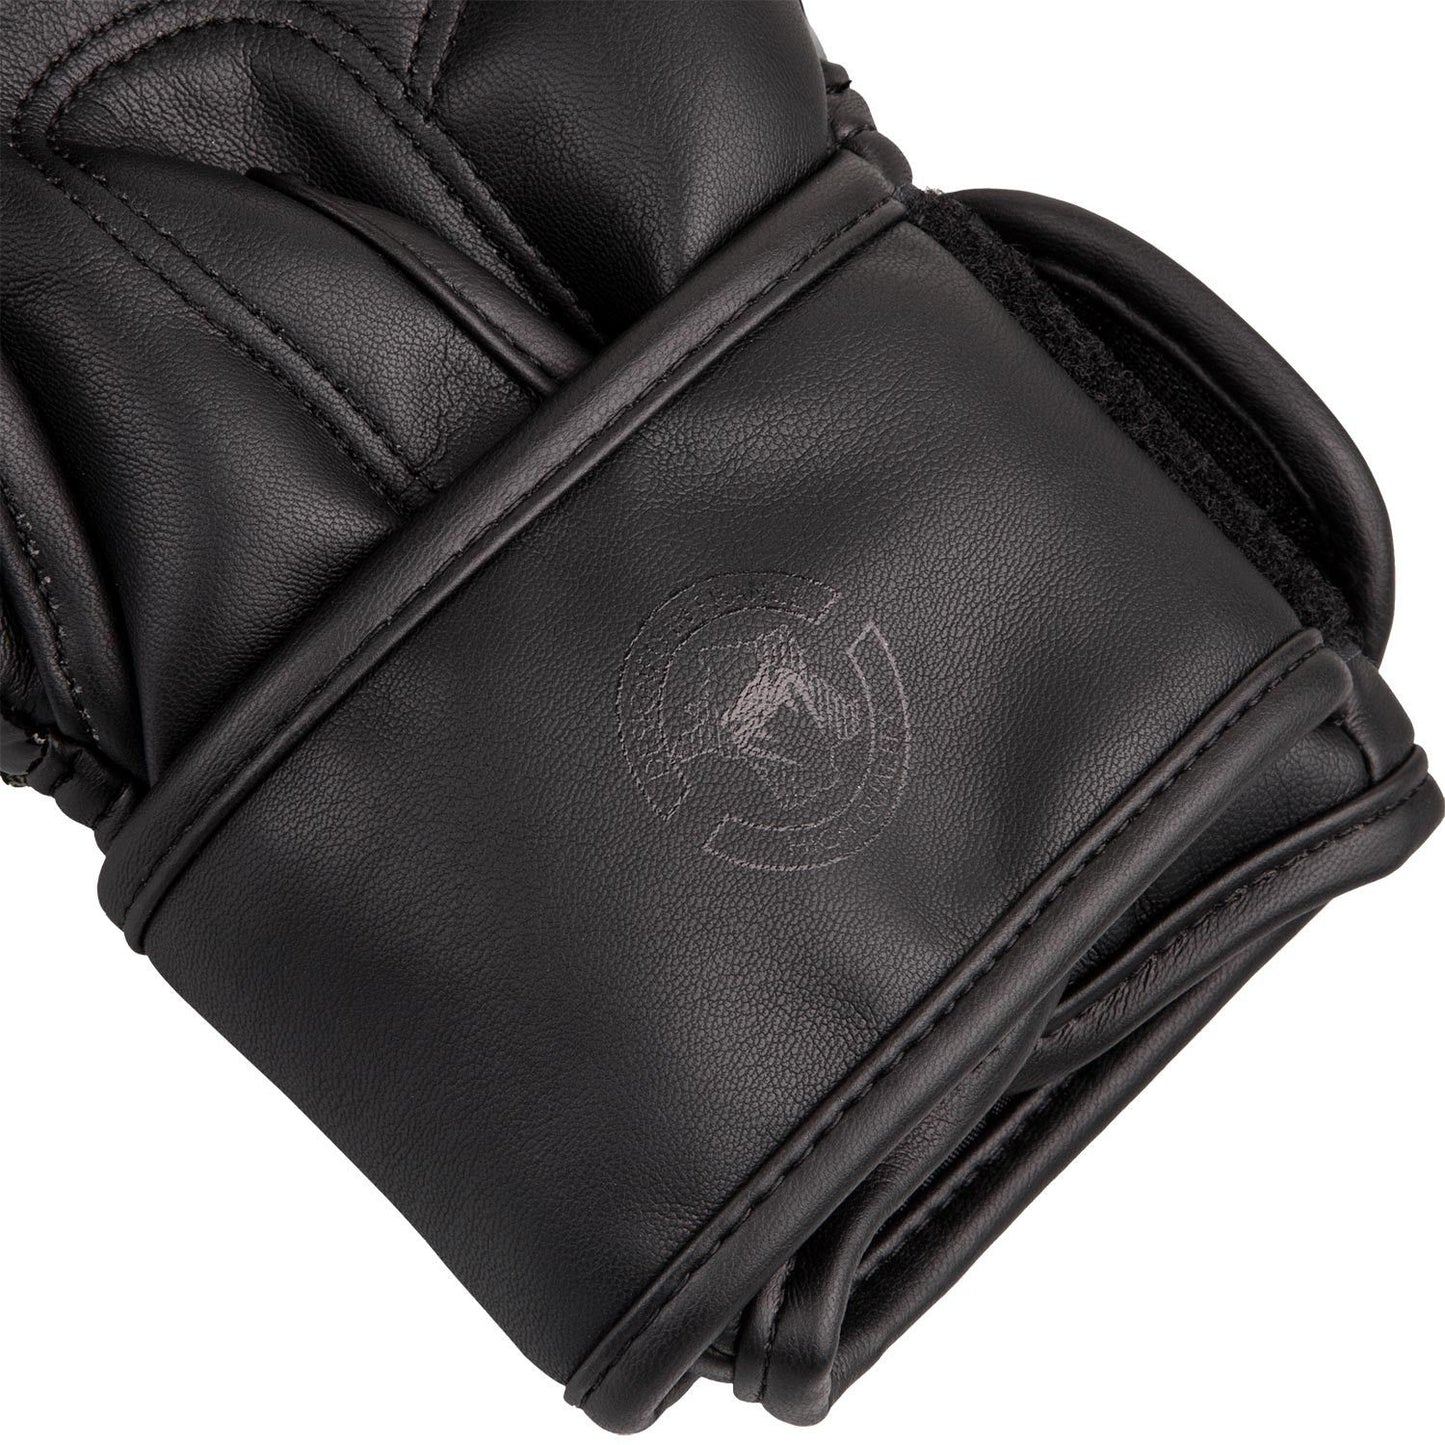 Venum Challenger 3.0 Boxing Gloves - Black/ Black